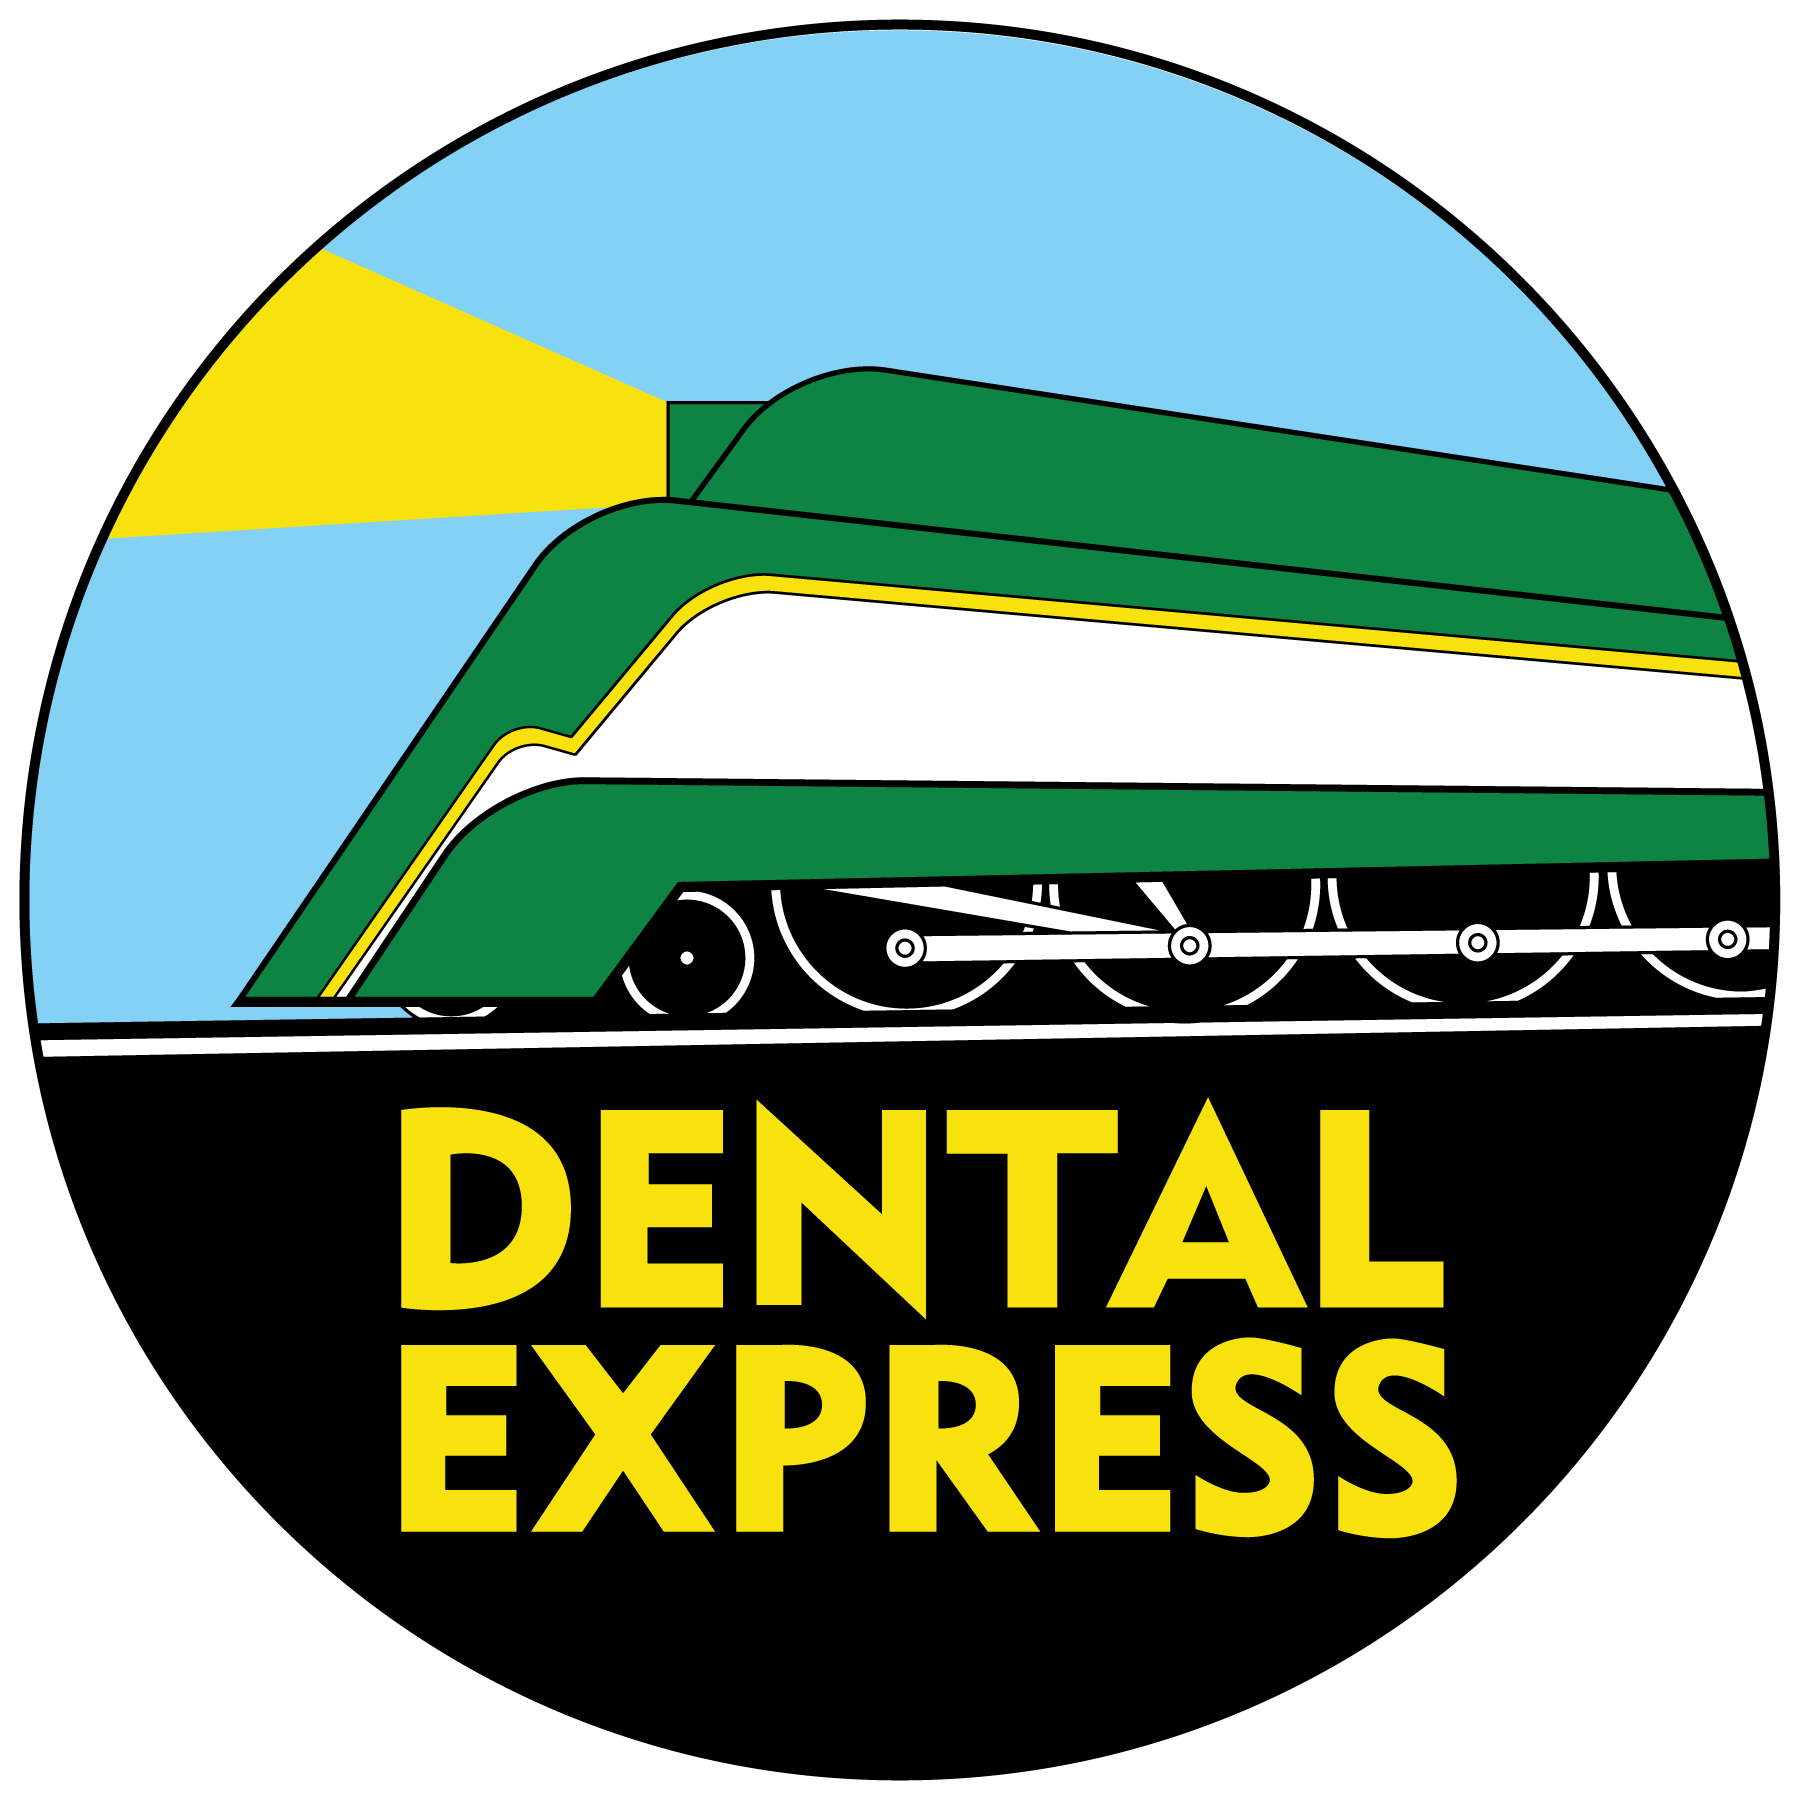 The Dental Express